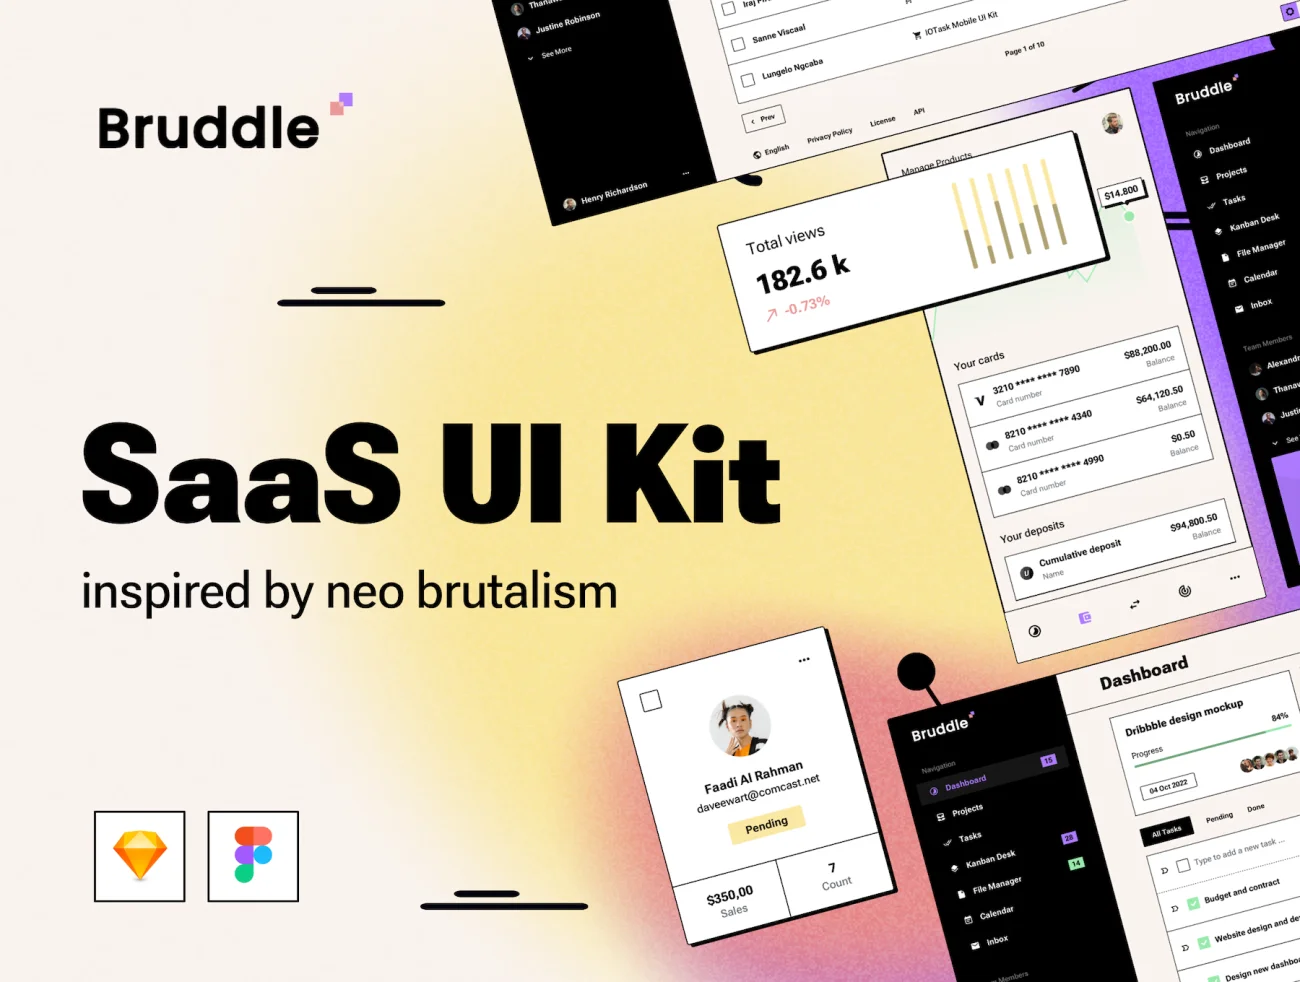 Bruddle-面向SaaS仪表板的新布鲁塞尔主义UI工具包 Bruddle - Neo brutalism UI kit for SaaS Dashboards sketch, may, ttf, figma格式缩略图到位啦UI